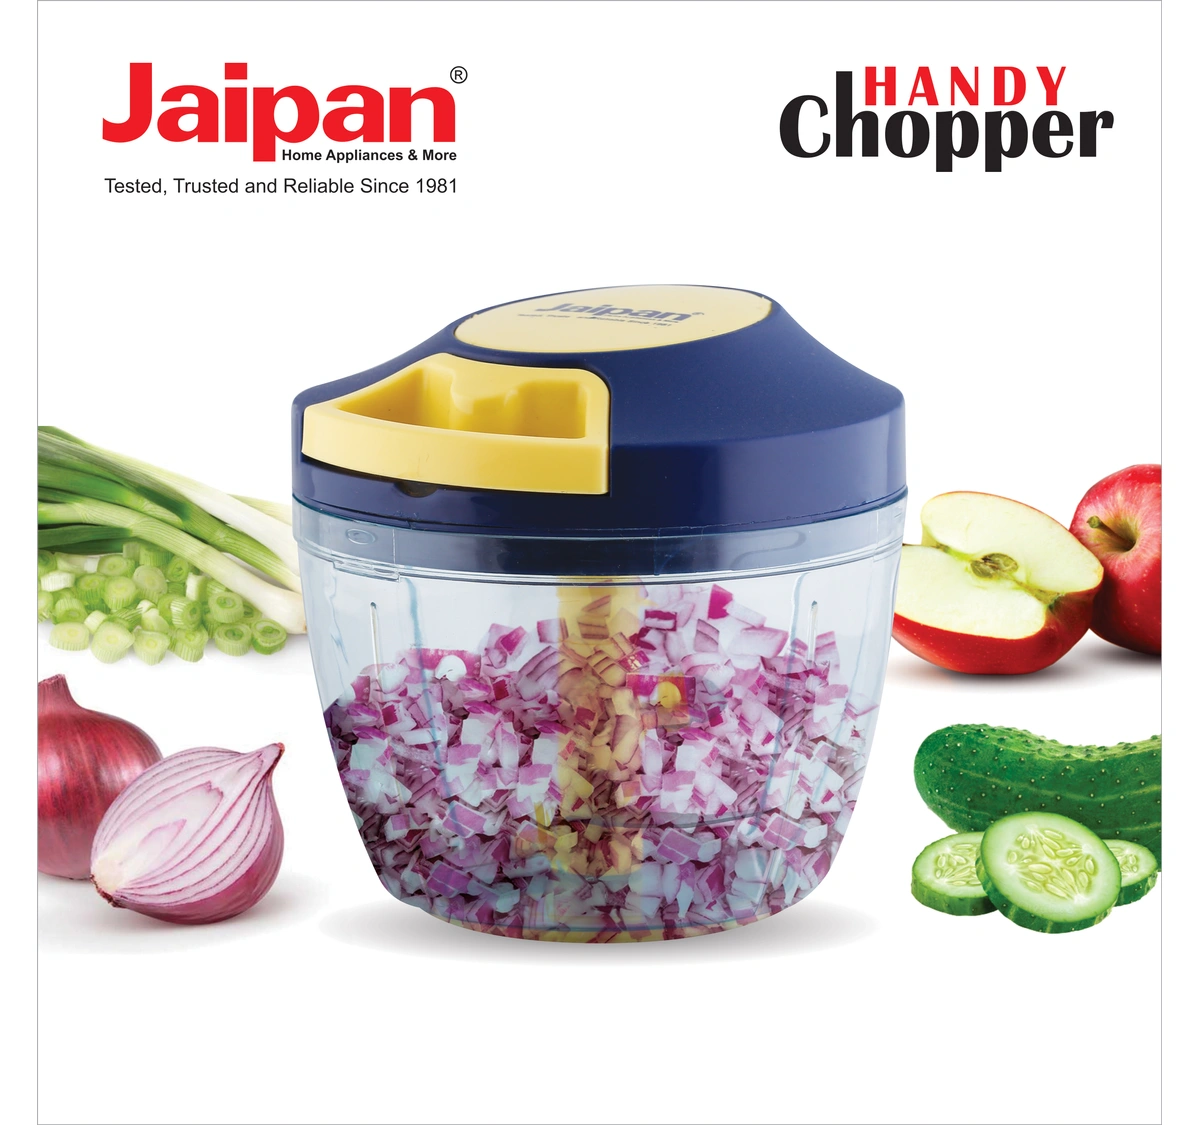 Buy Online: Jaipan Pro Handy Chopper